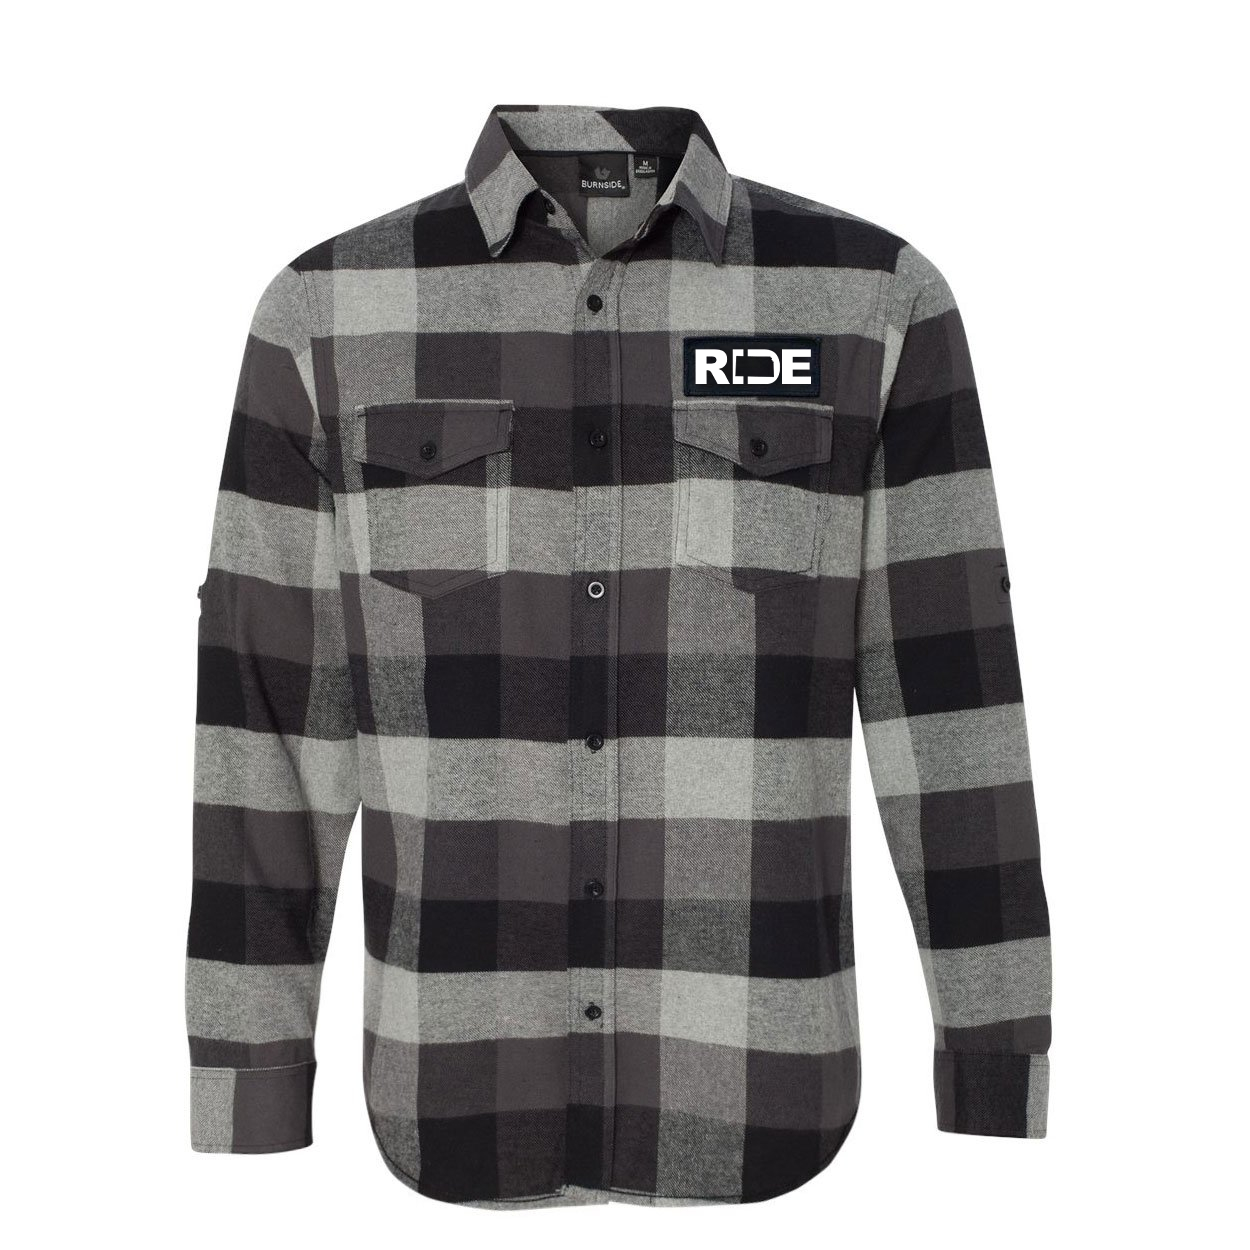 Ride Kansas Classic Unisex Long Sleeve Woven Patch Flannel Shirt Black/Gray (White Logo)